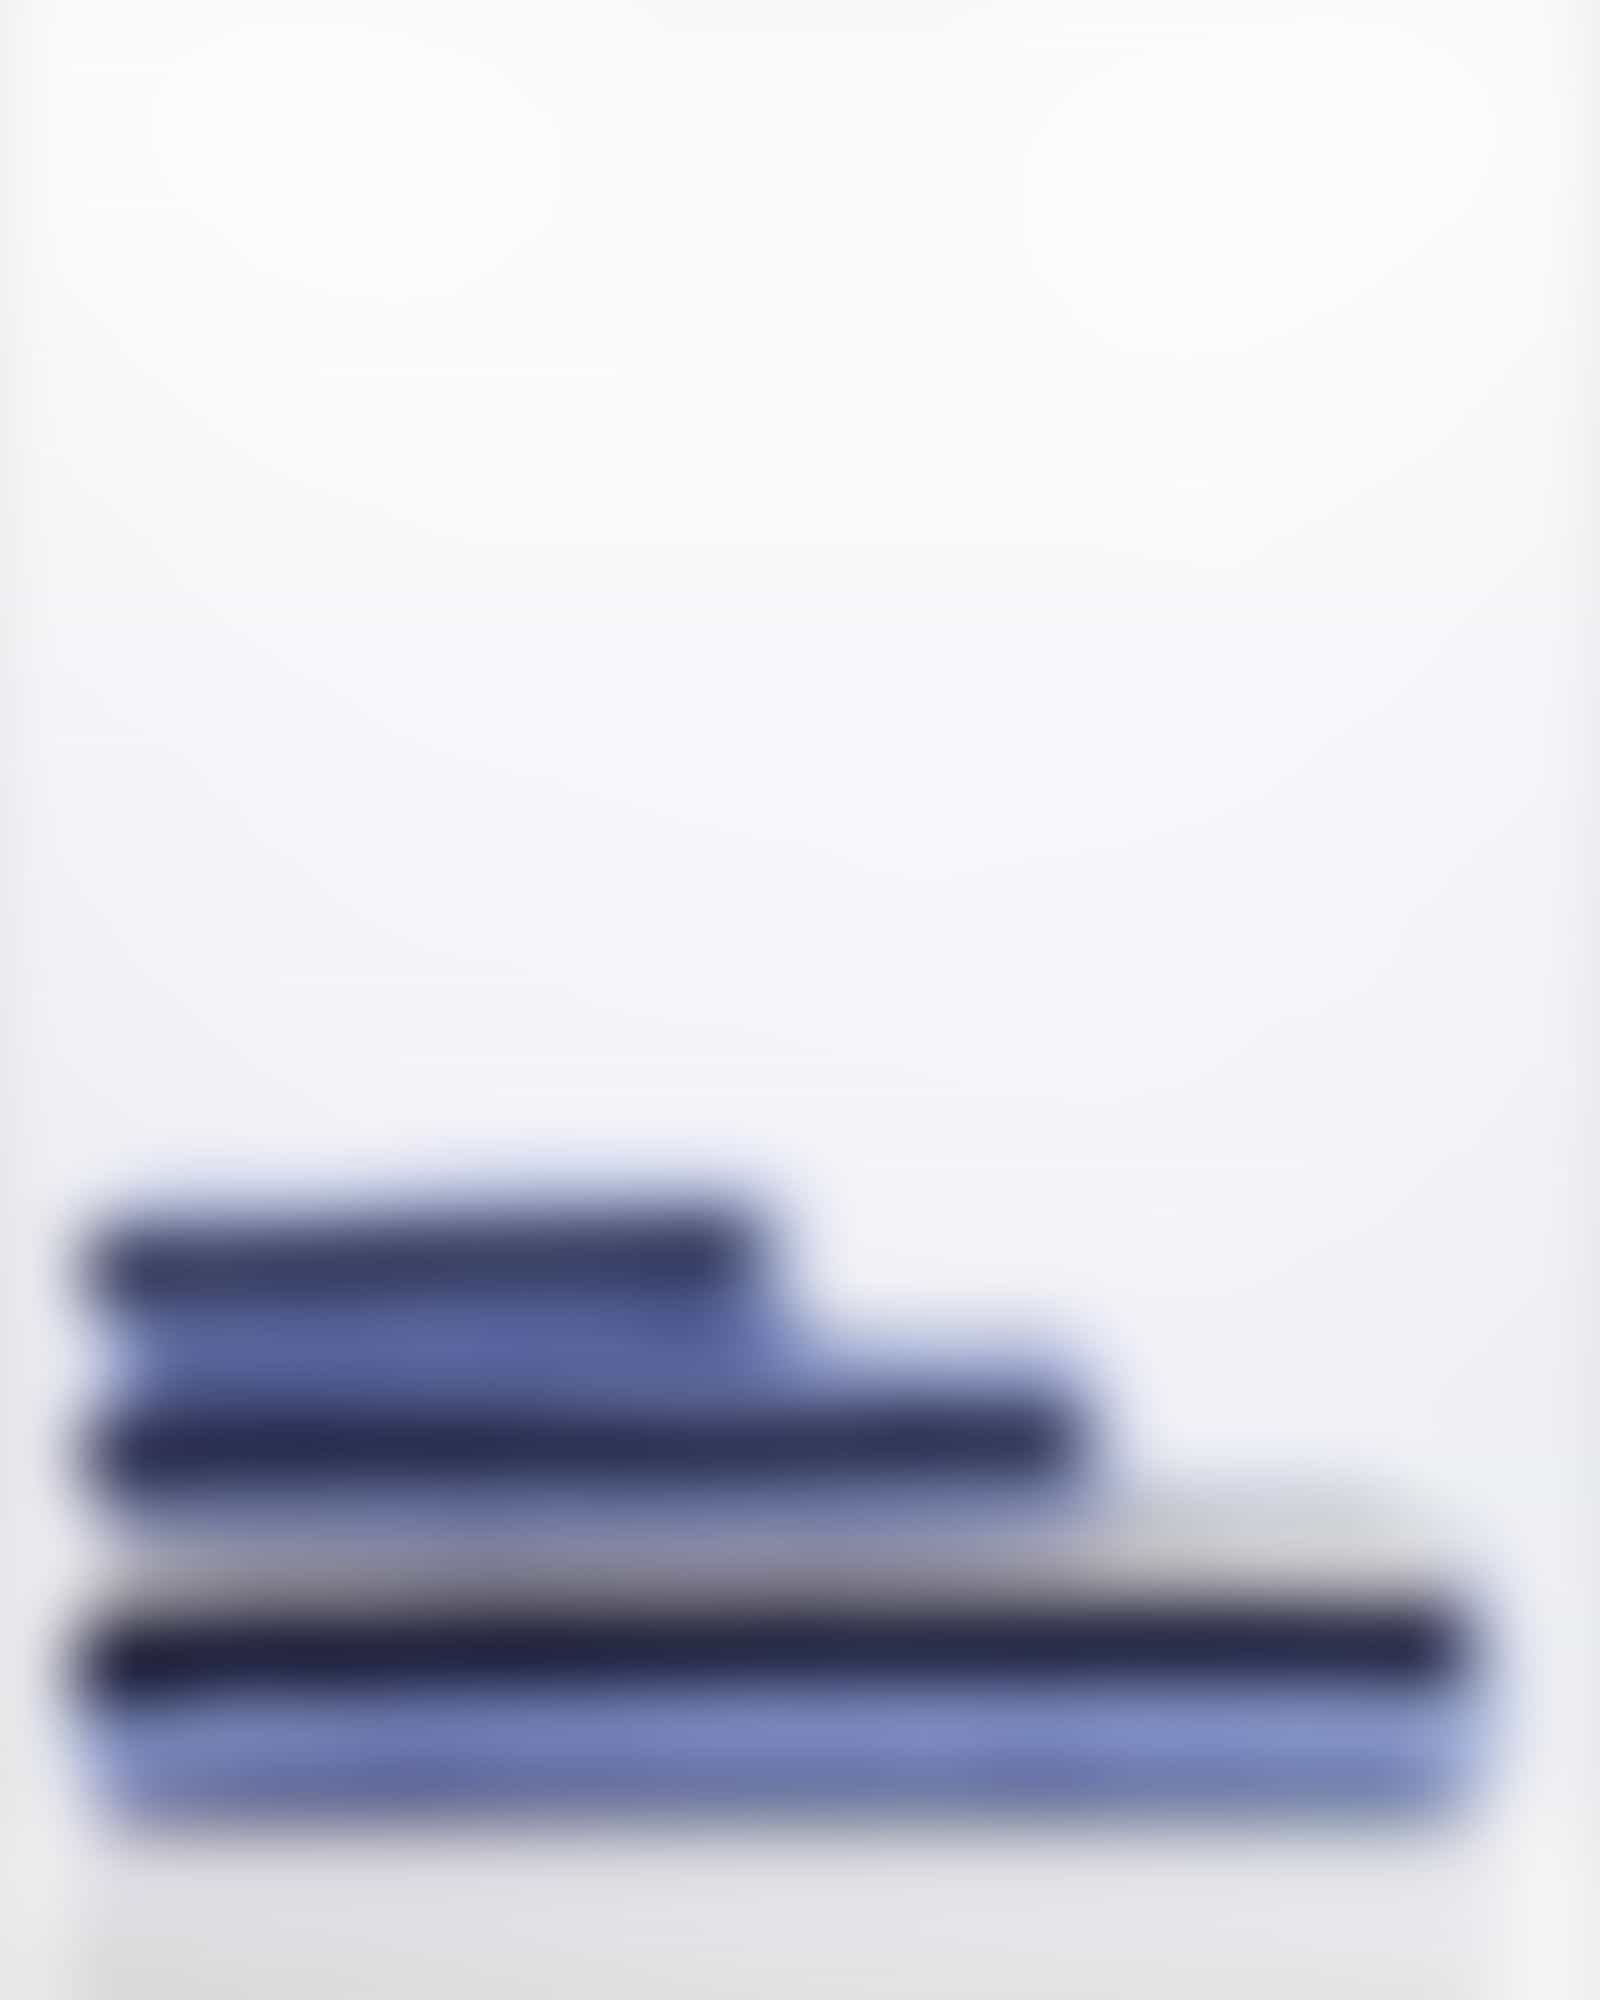 Cawö Handtücher Shades Streifen 6235 - Farbe: aqua - 11